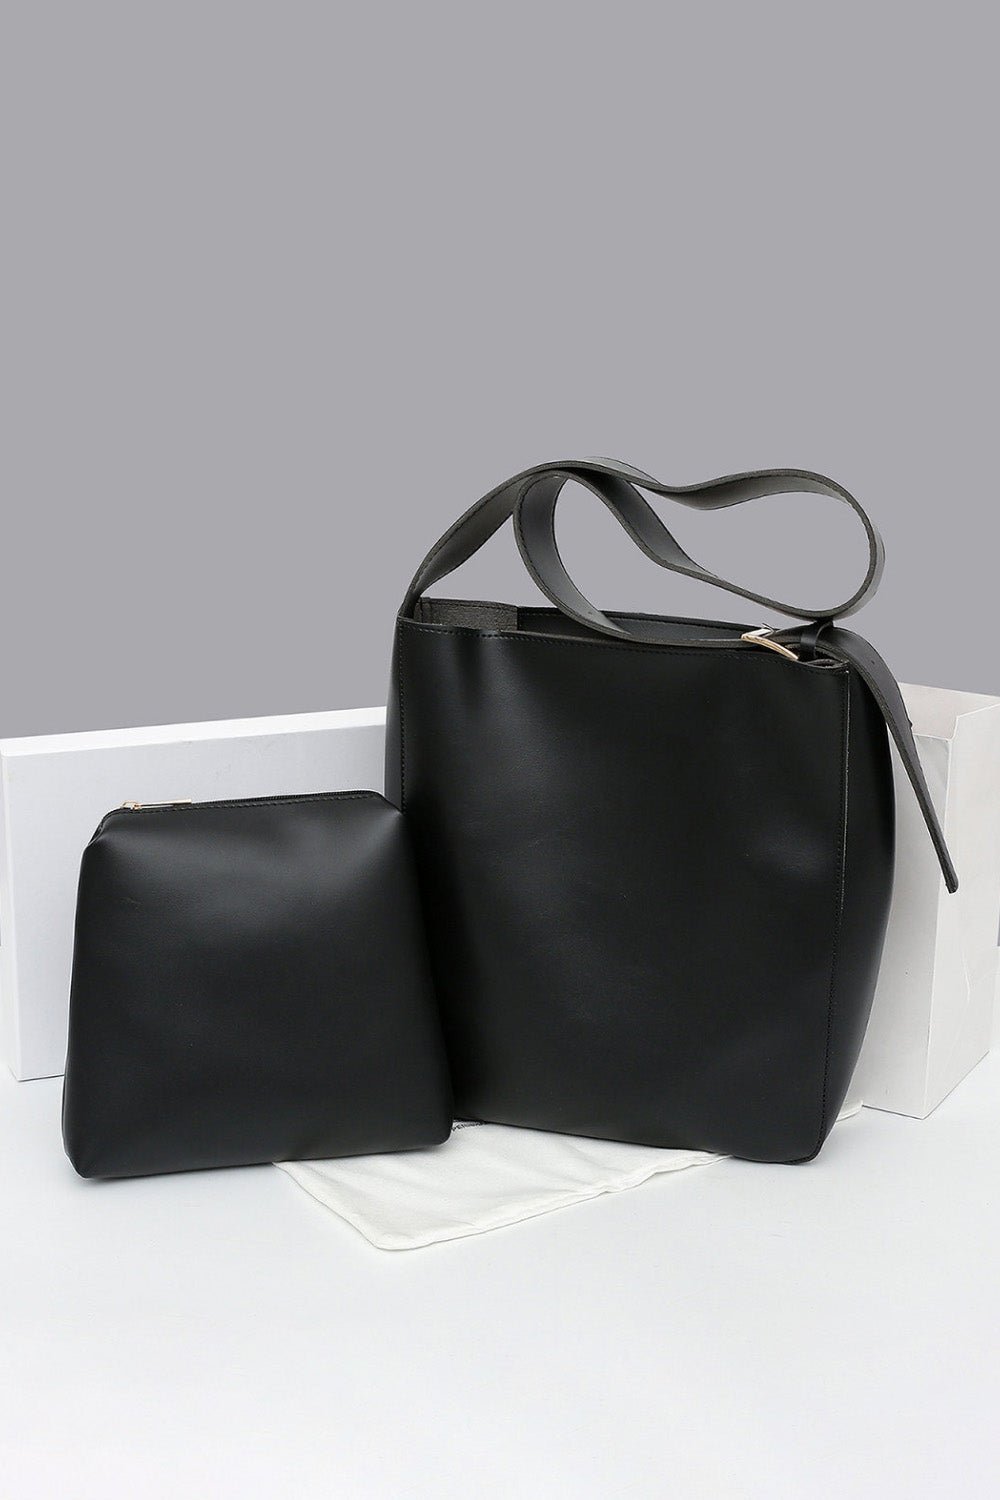 2-Piece Leather Tote Bag Set - Handbag Tangerine Goddess Black / One Size